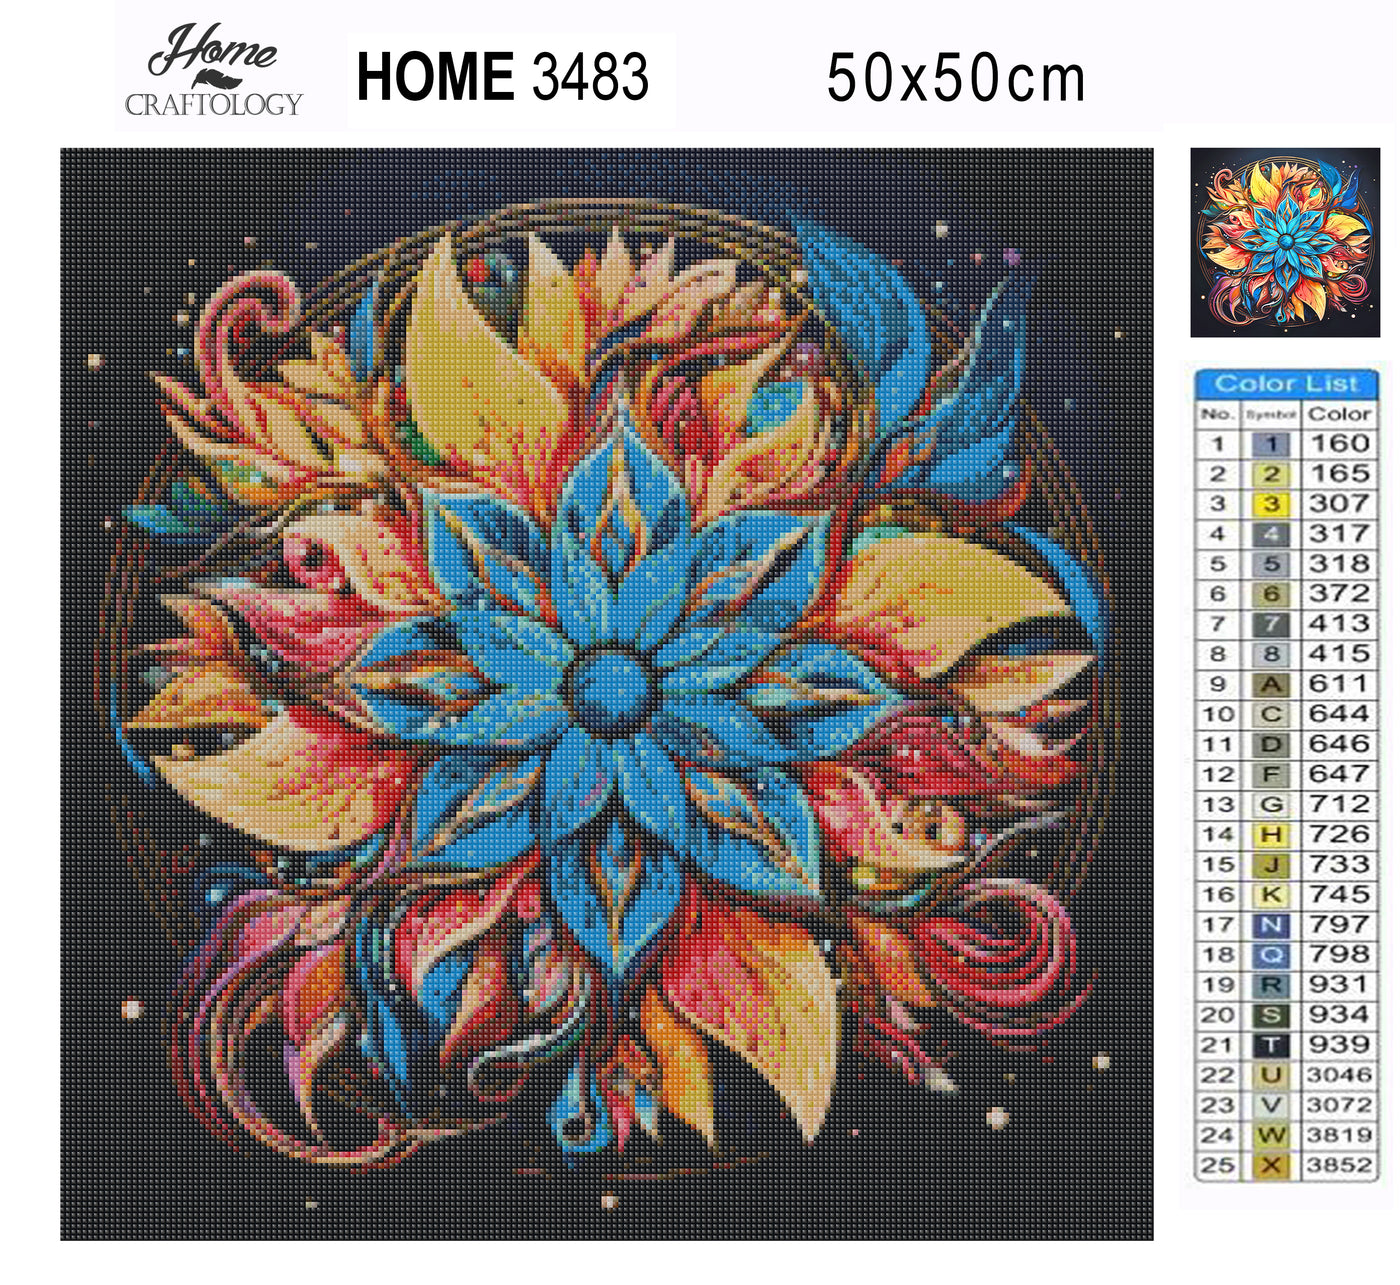 New! Sparkling Flower Mandala - Premium Diamond Painting Kit